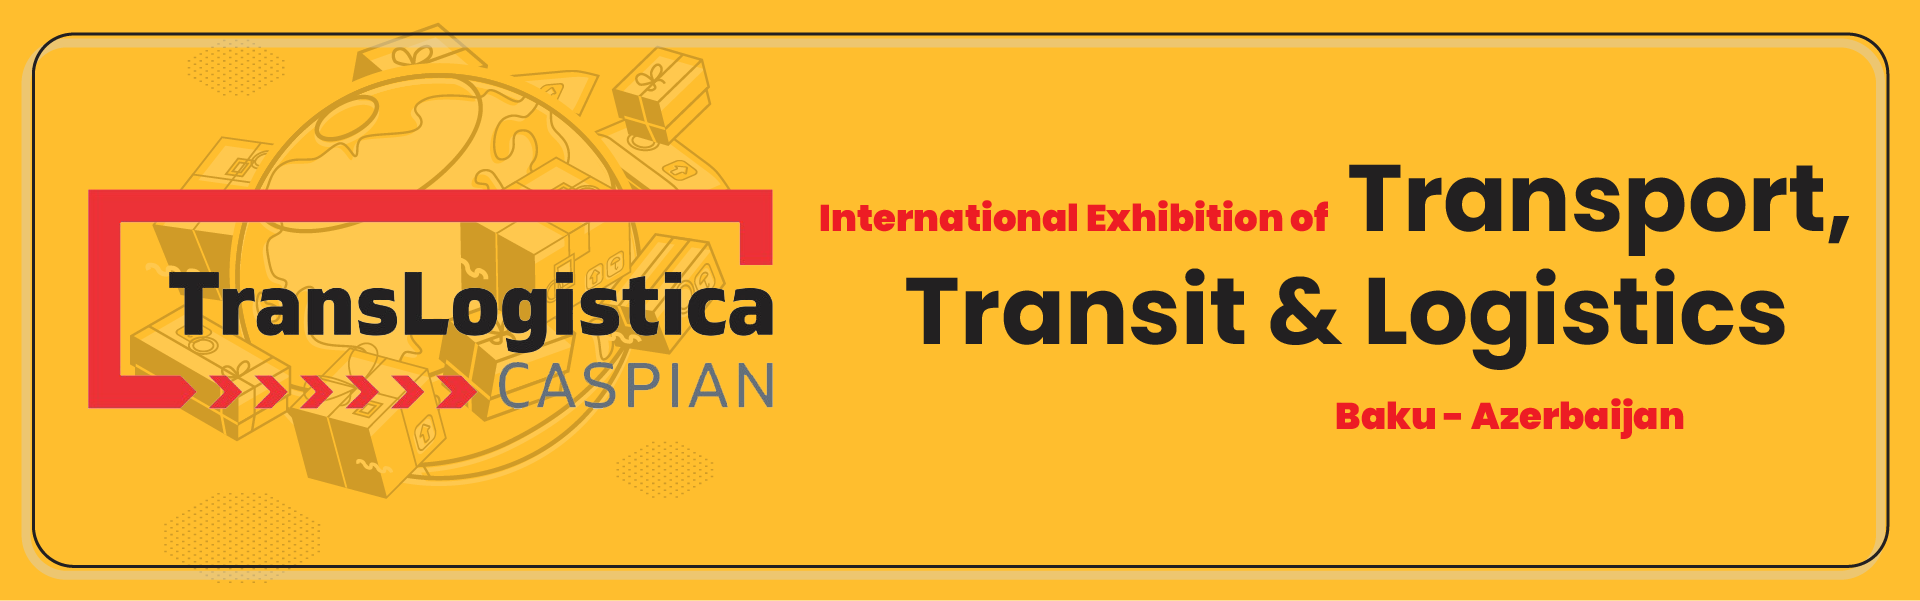 Caspian Transport Transit and Logistics Exhibition Baku Azerbaijan